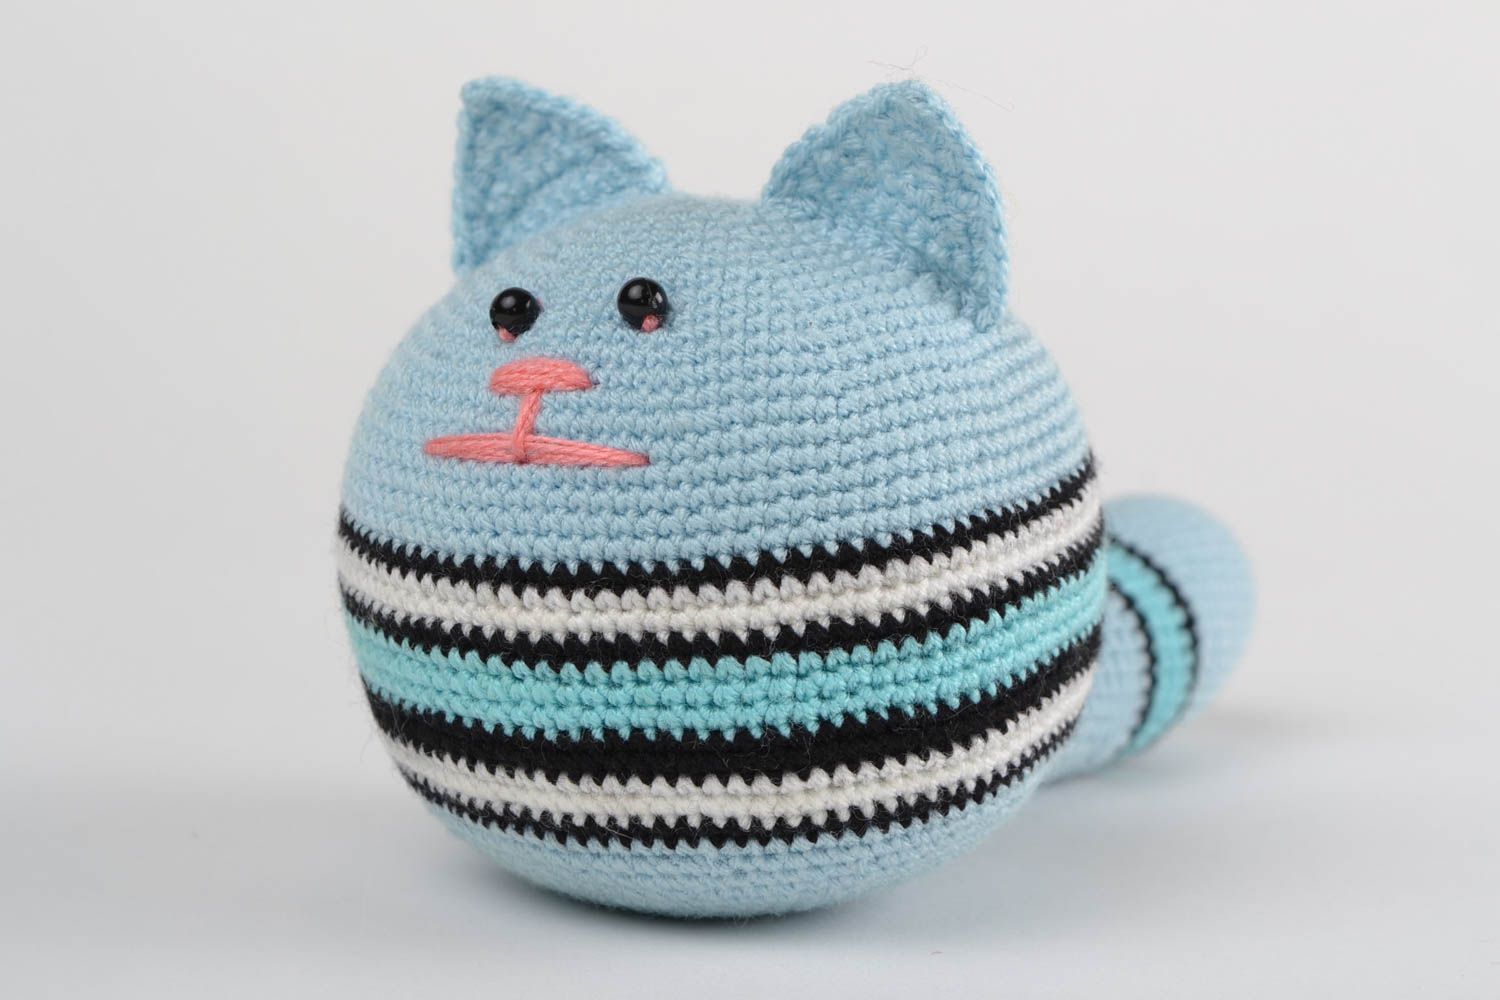 Handmade anti-stress soft toy striped blue cat crocheted of acrylic threads photo 1